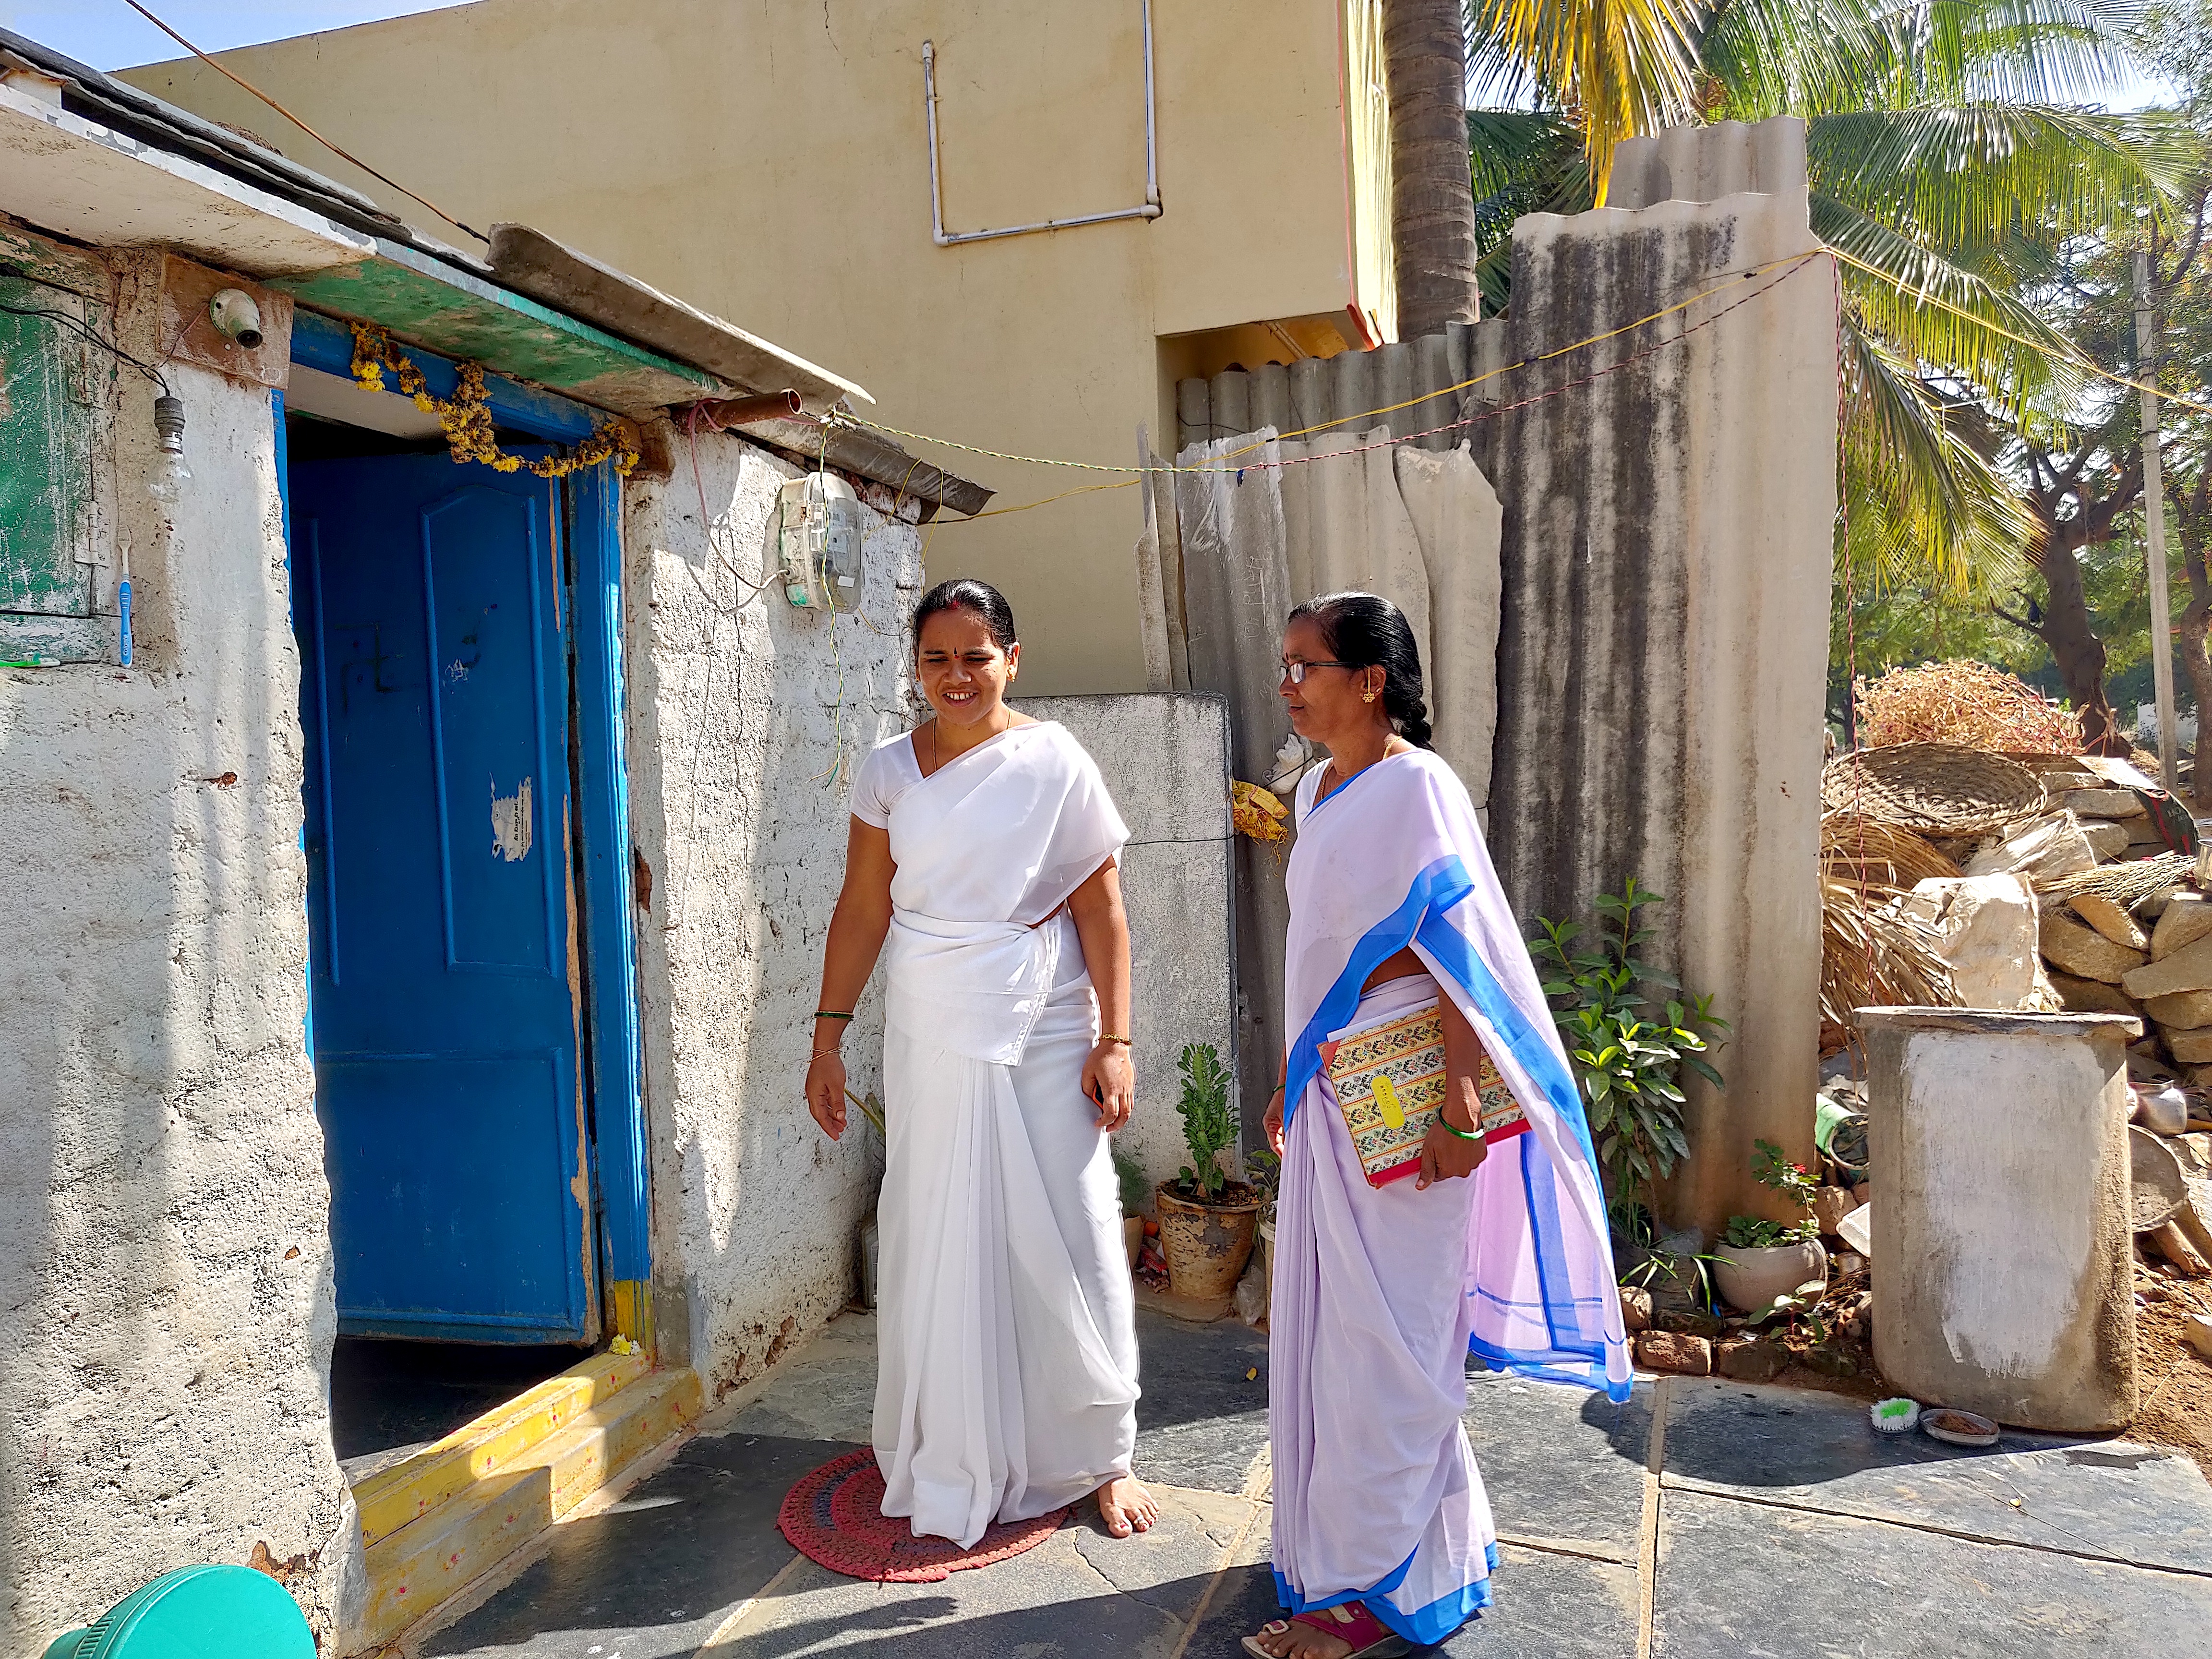 Health care workers in India go door to door during the COVID-19 pandemic